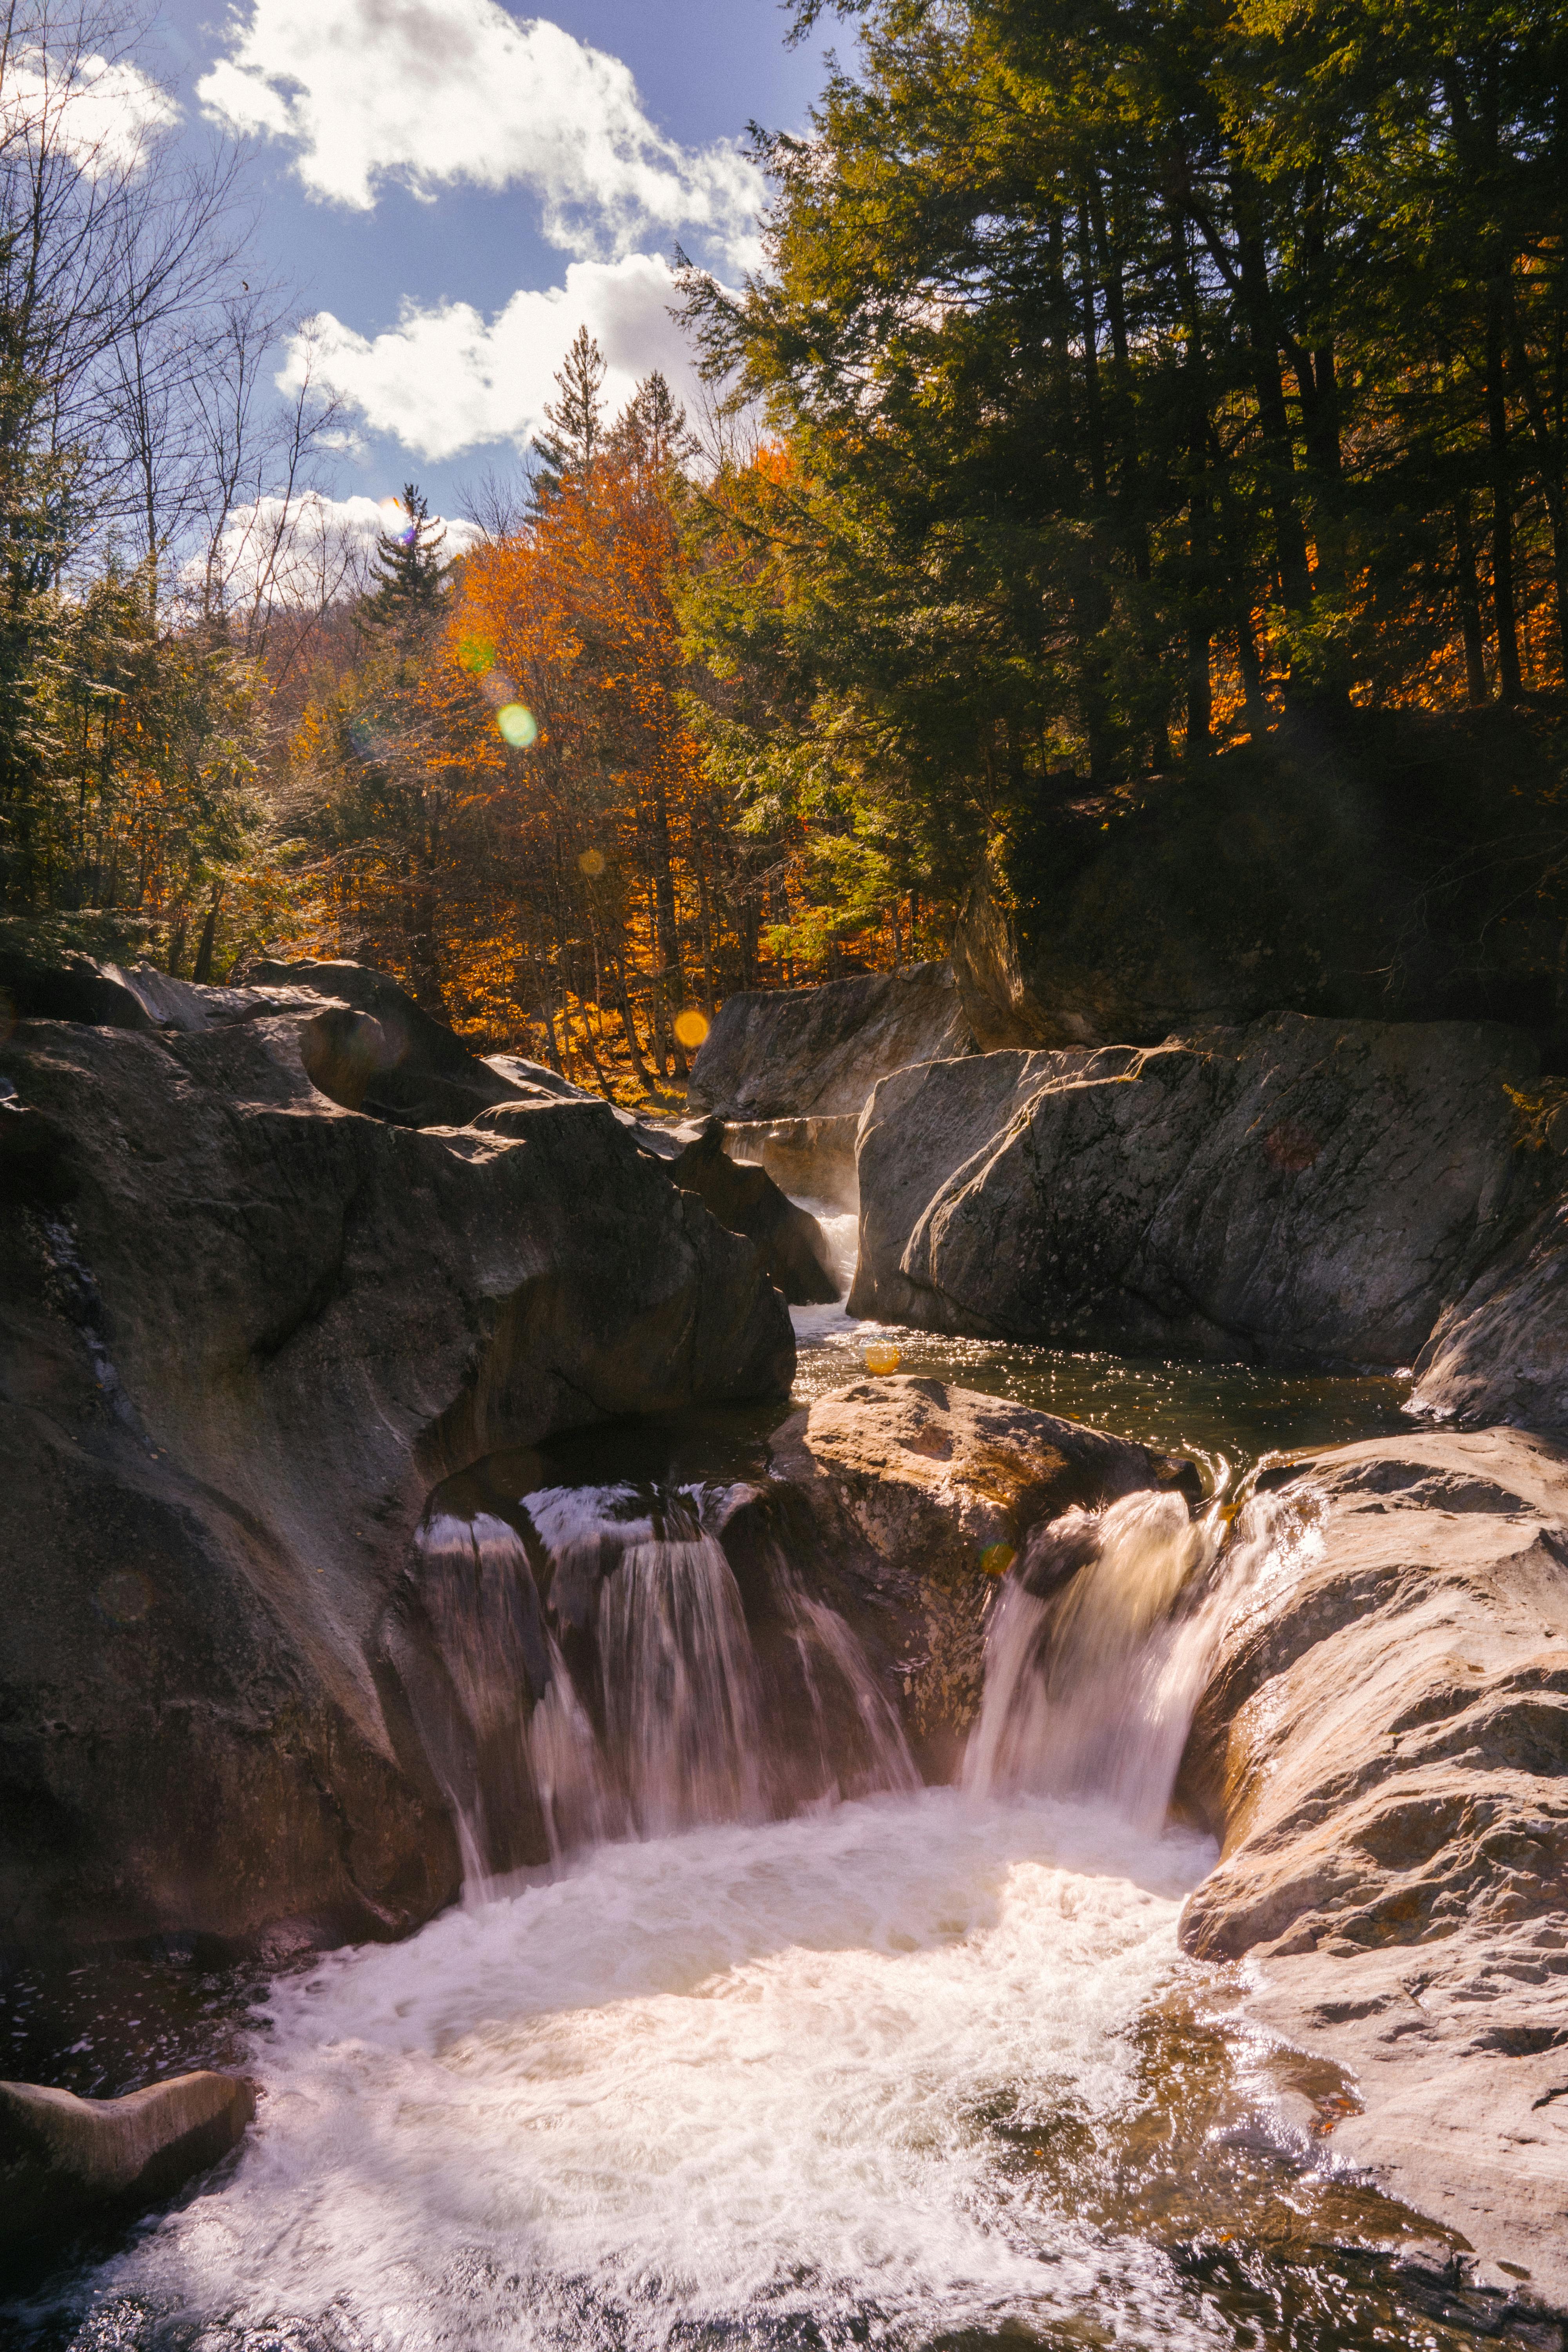 waterfall flowing among big rocks in autumn woods